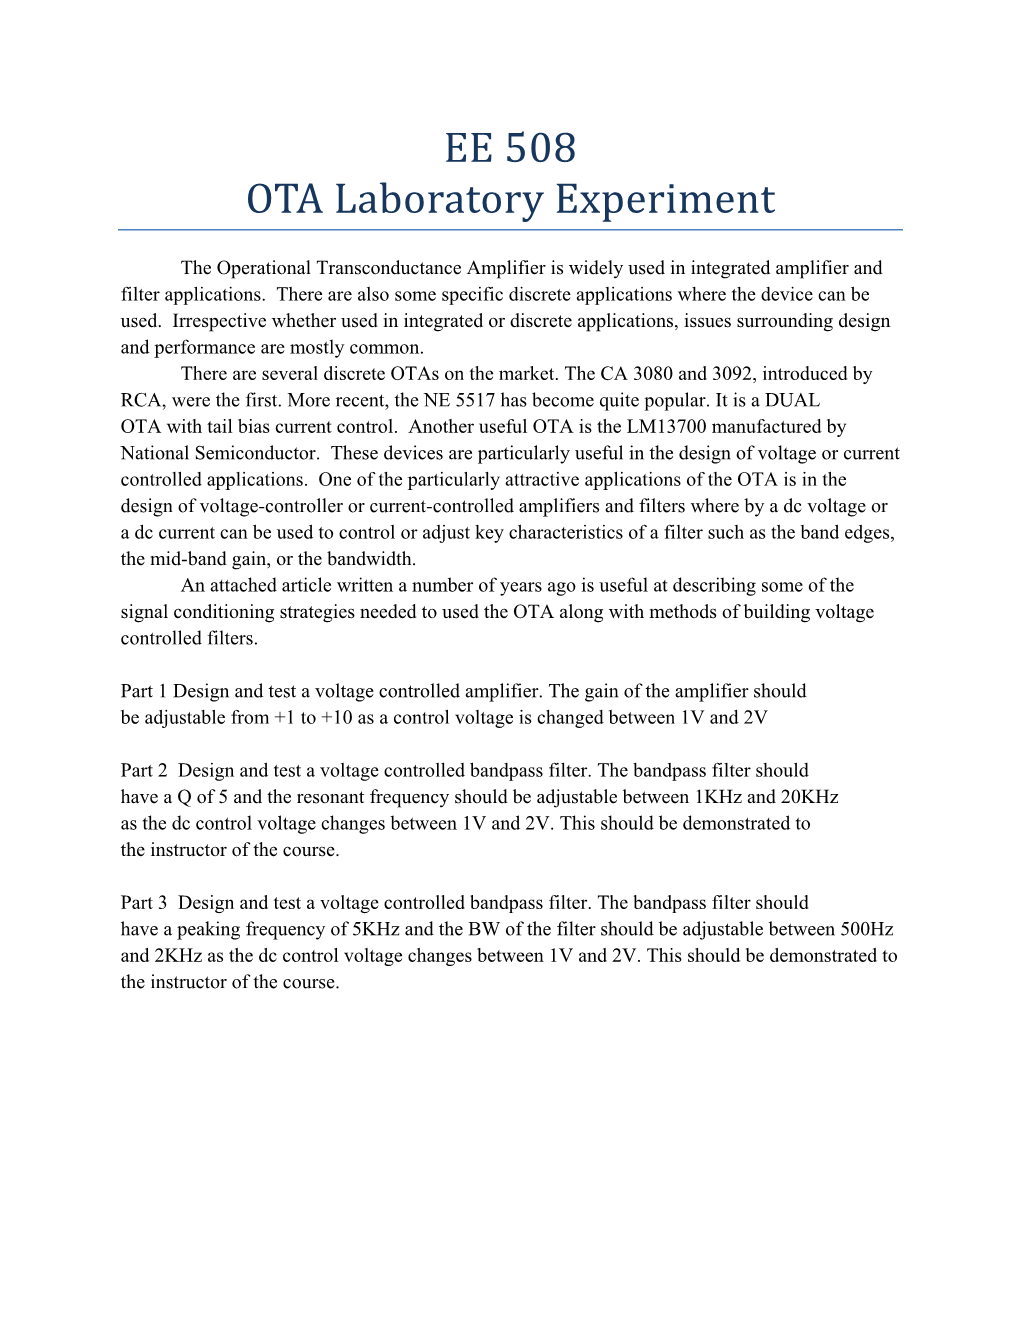 EE 508 OTA Laboratory Experiment